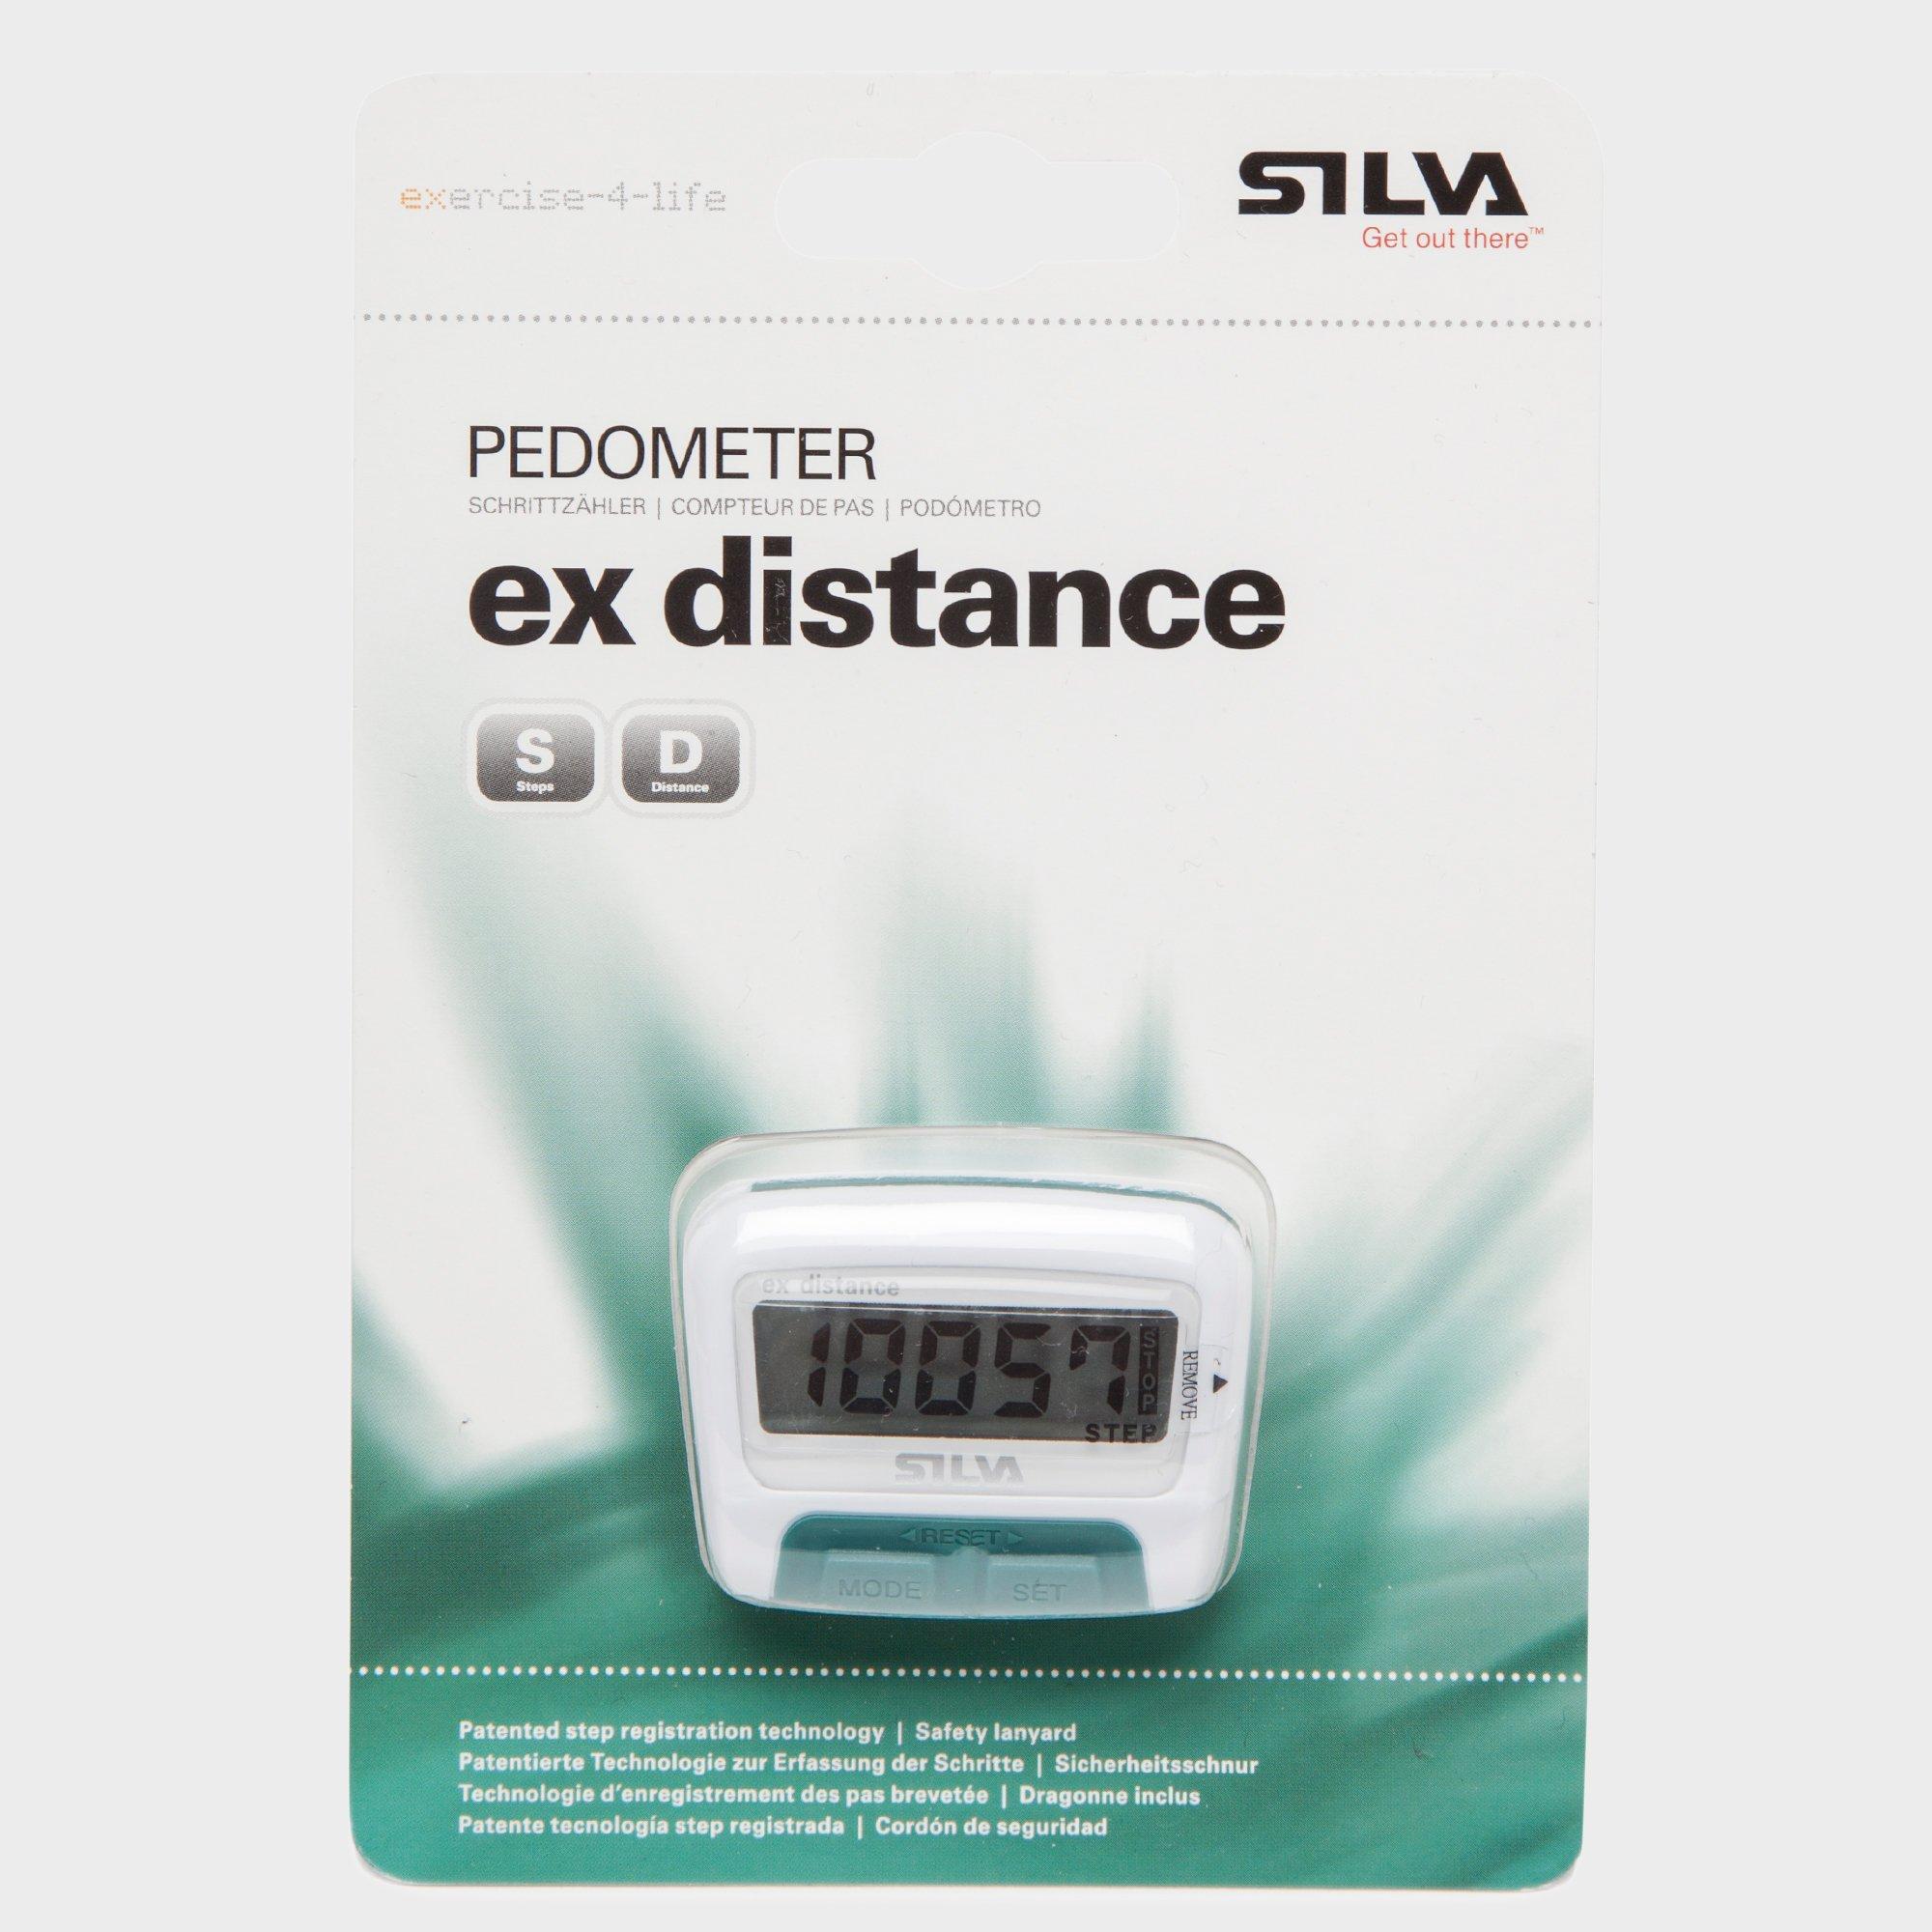 Silva Ex Distance Pedometer Review